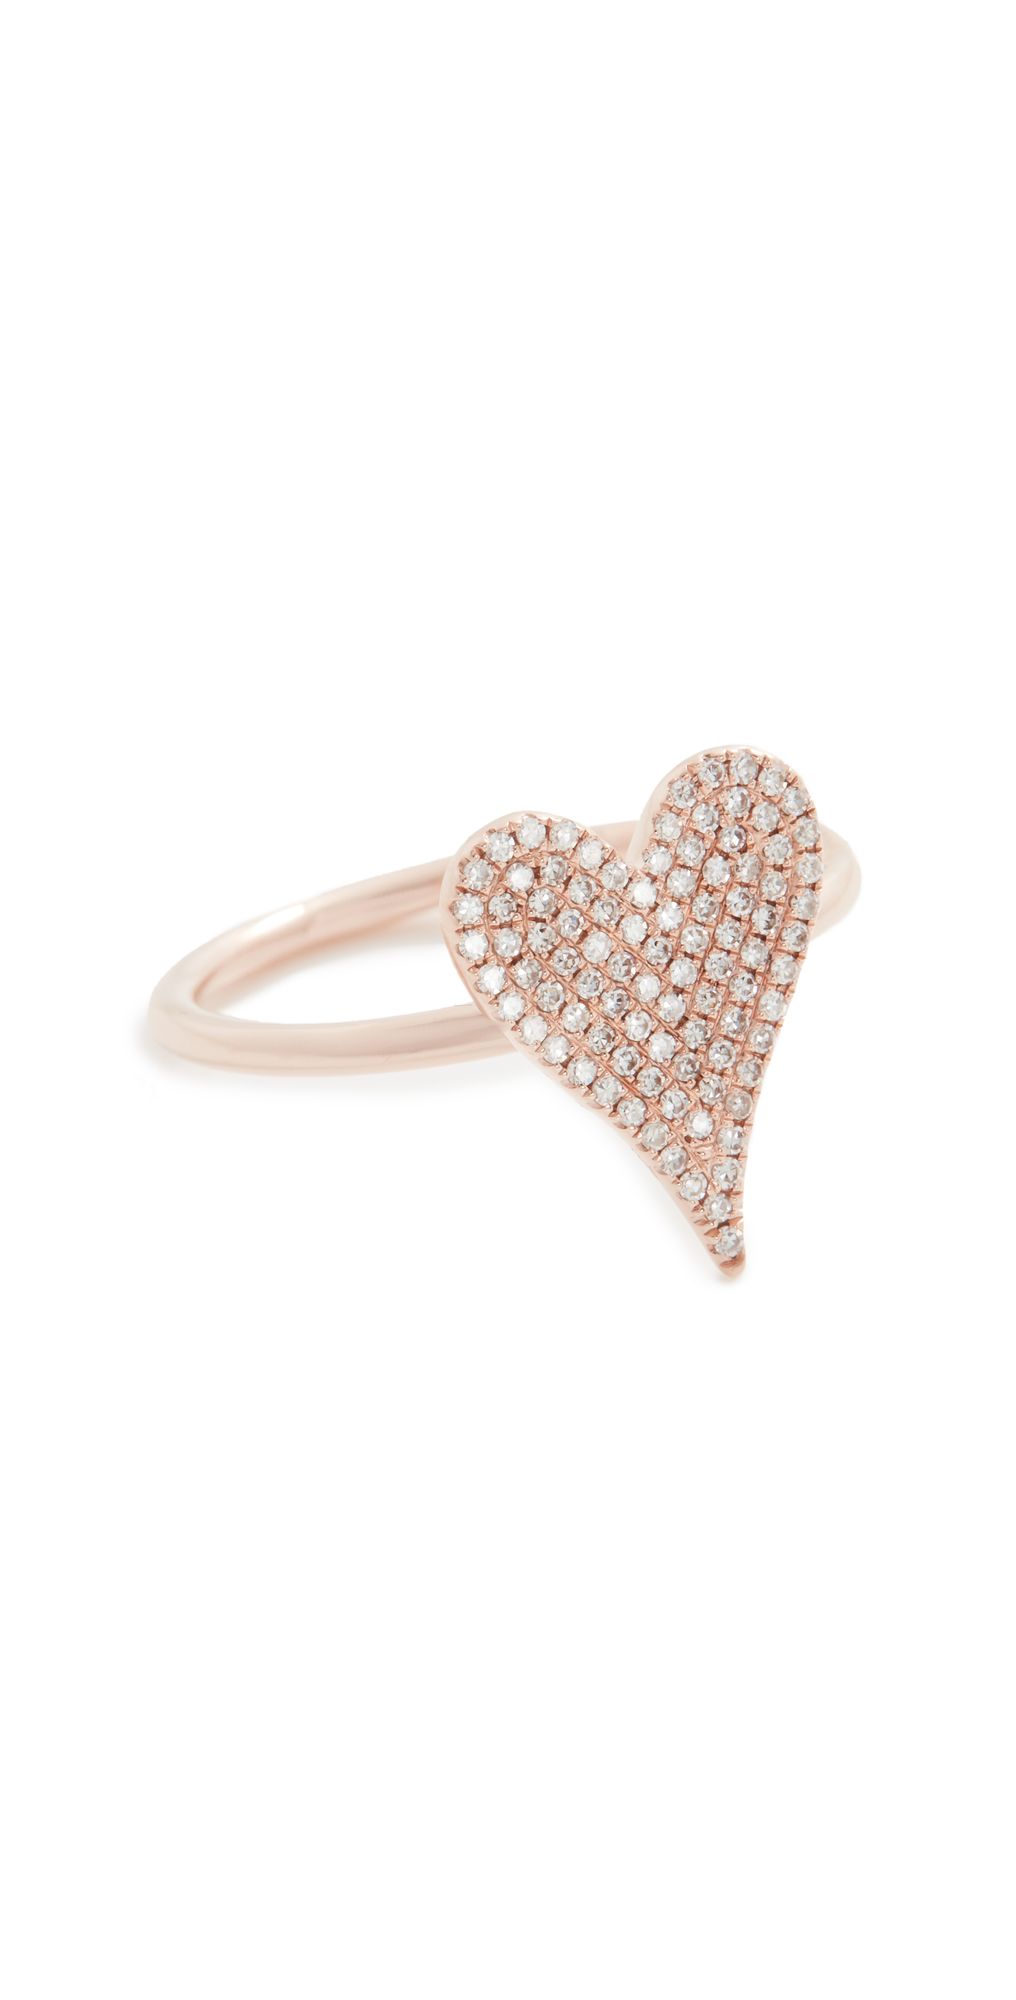 Stephanie Gottlieb Small Pave Heart Ring | Shopbop